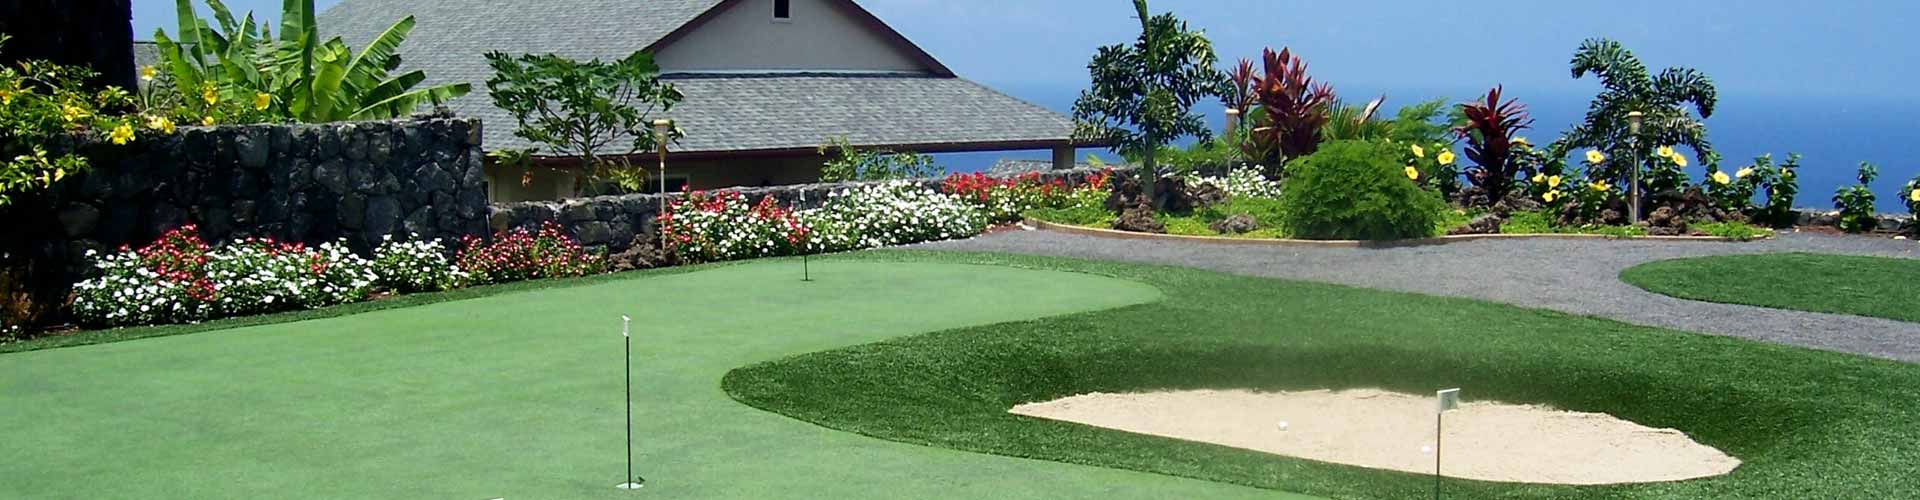 Backyard putting greens for beginner & advanced golfers